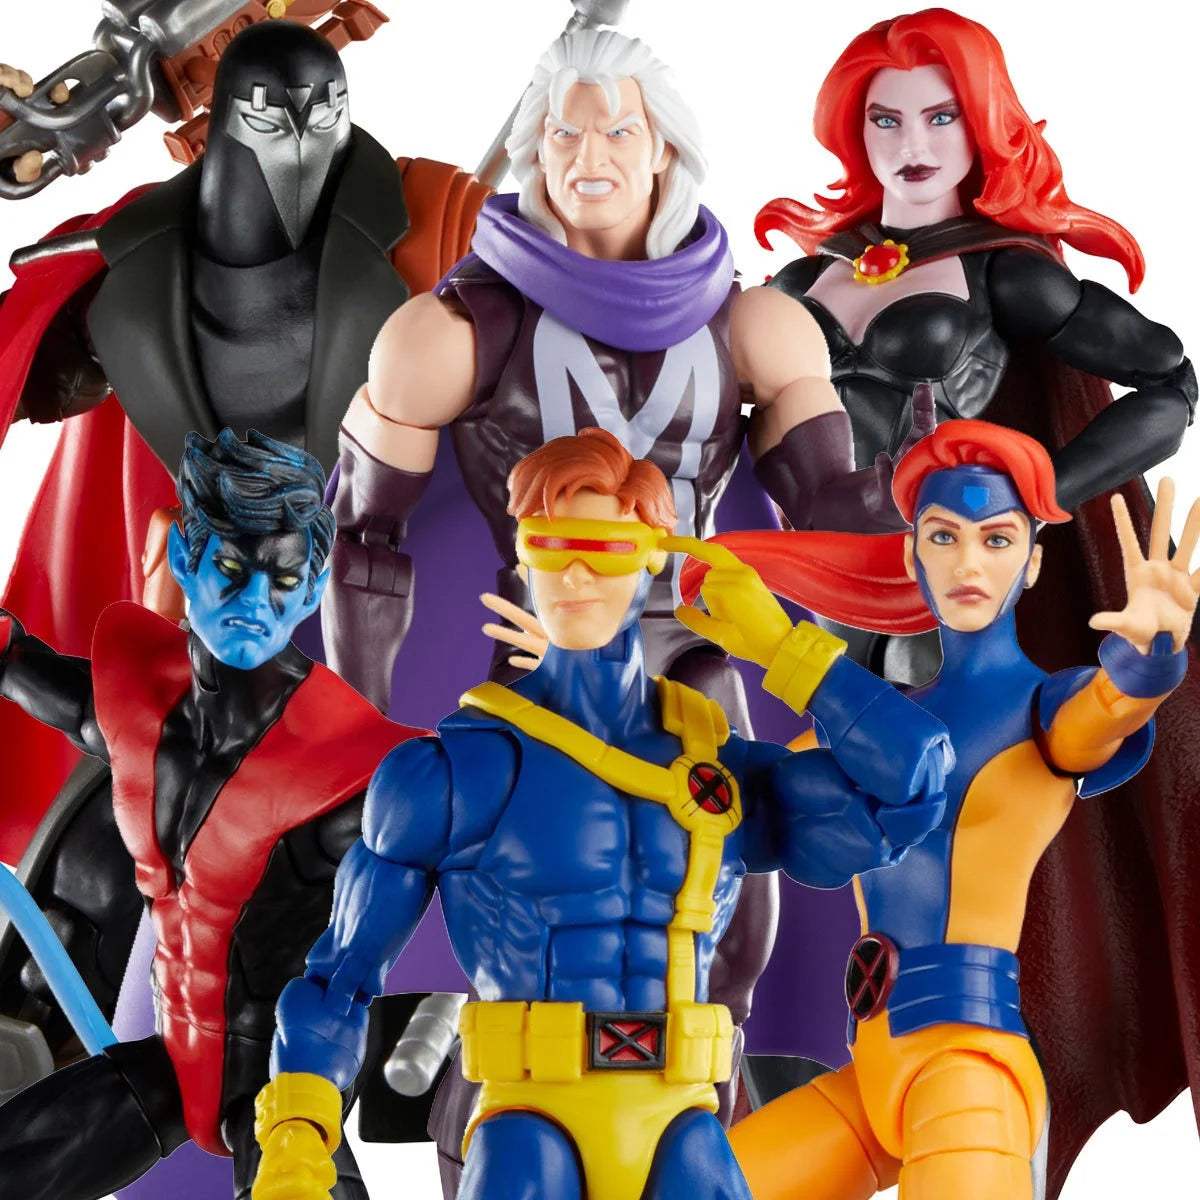 (PREVENTA) X-Men 97 Marvel Legends 6-inch Action Figures Wave